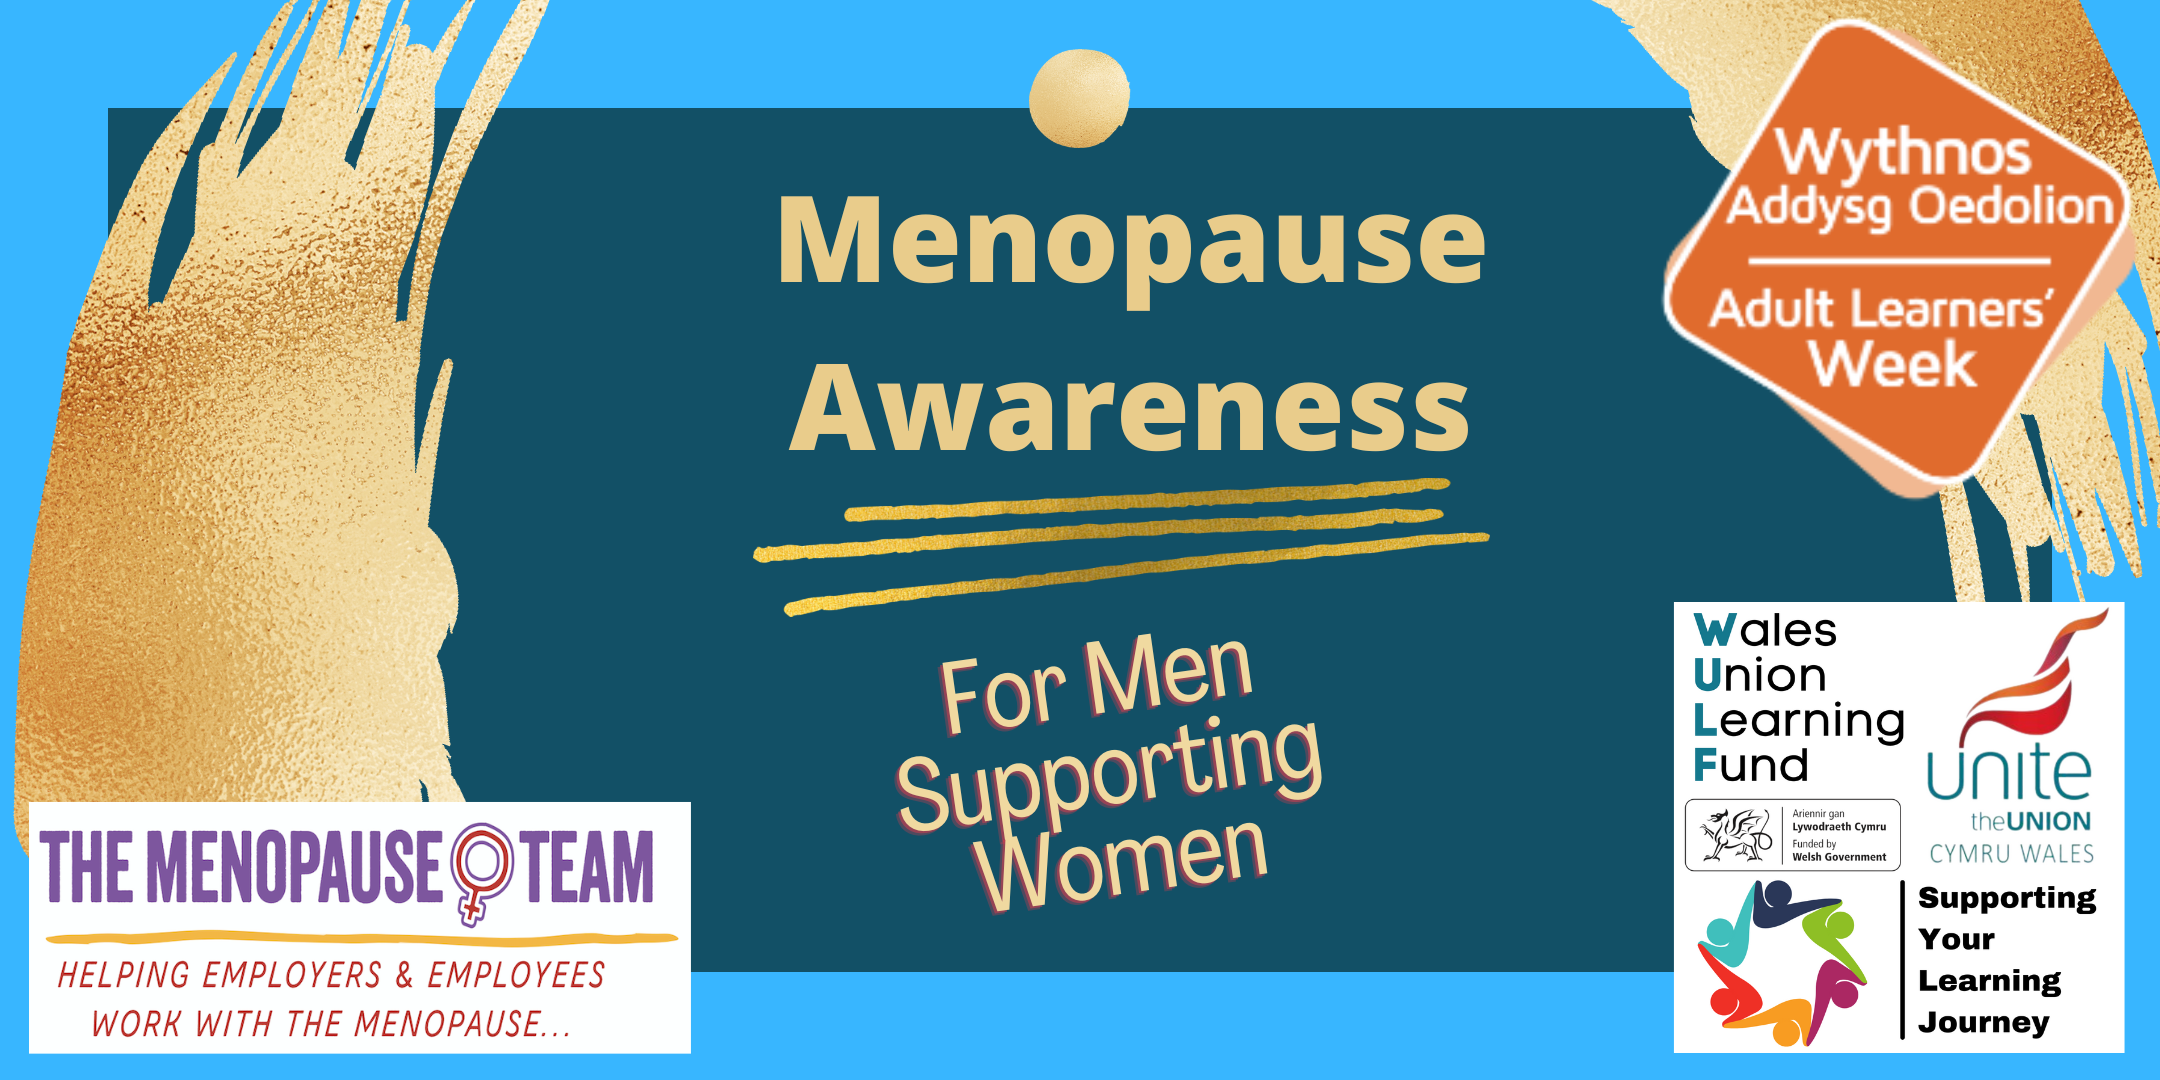 menopause-awareness-for-men-supporting-women